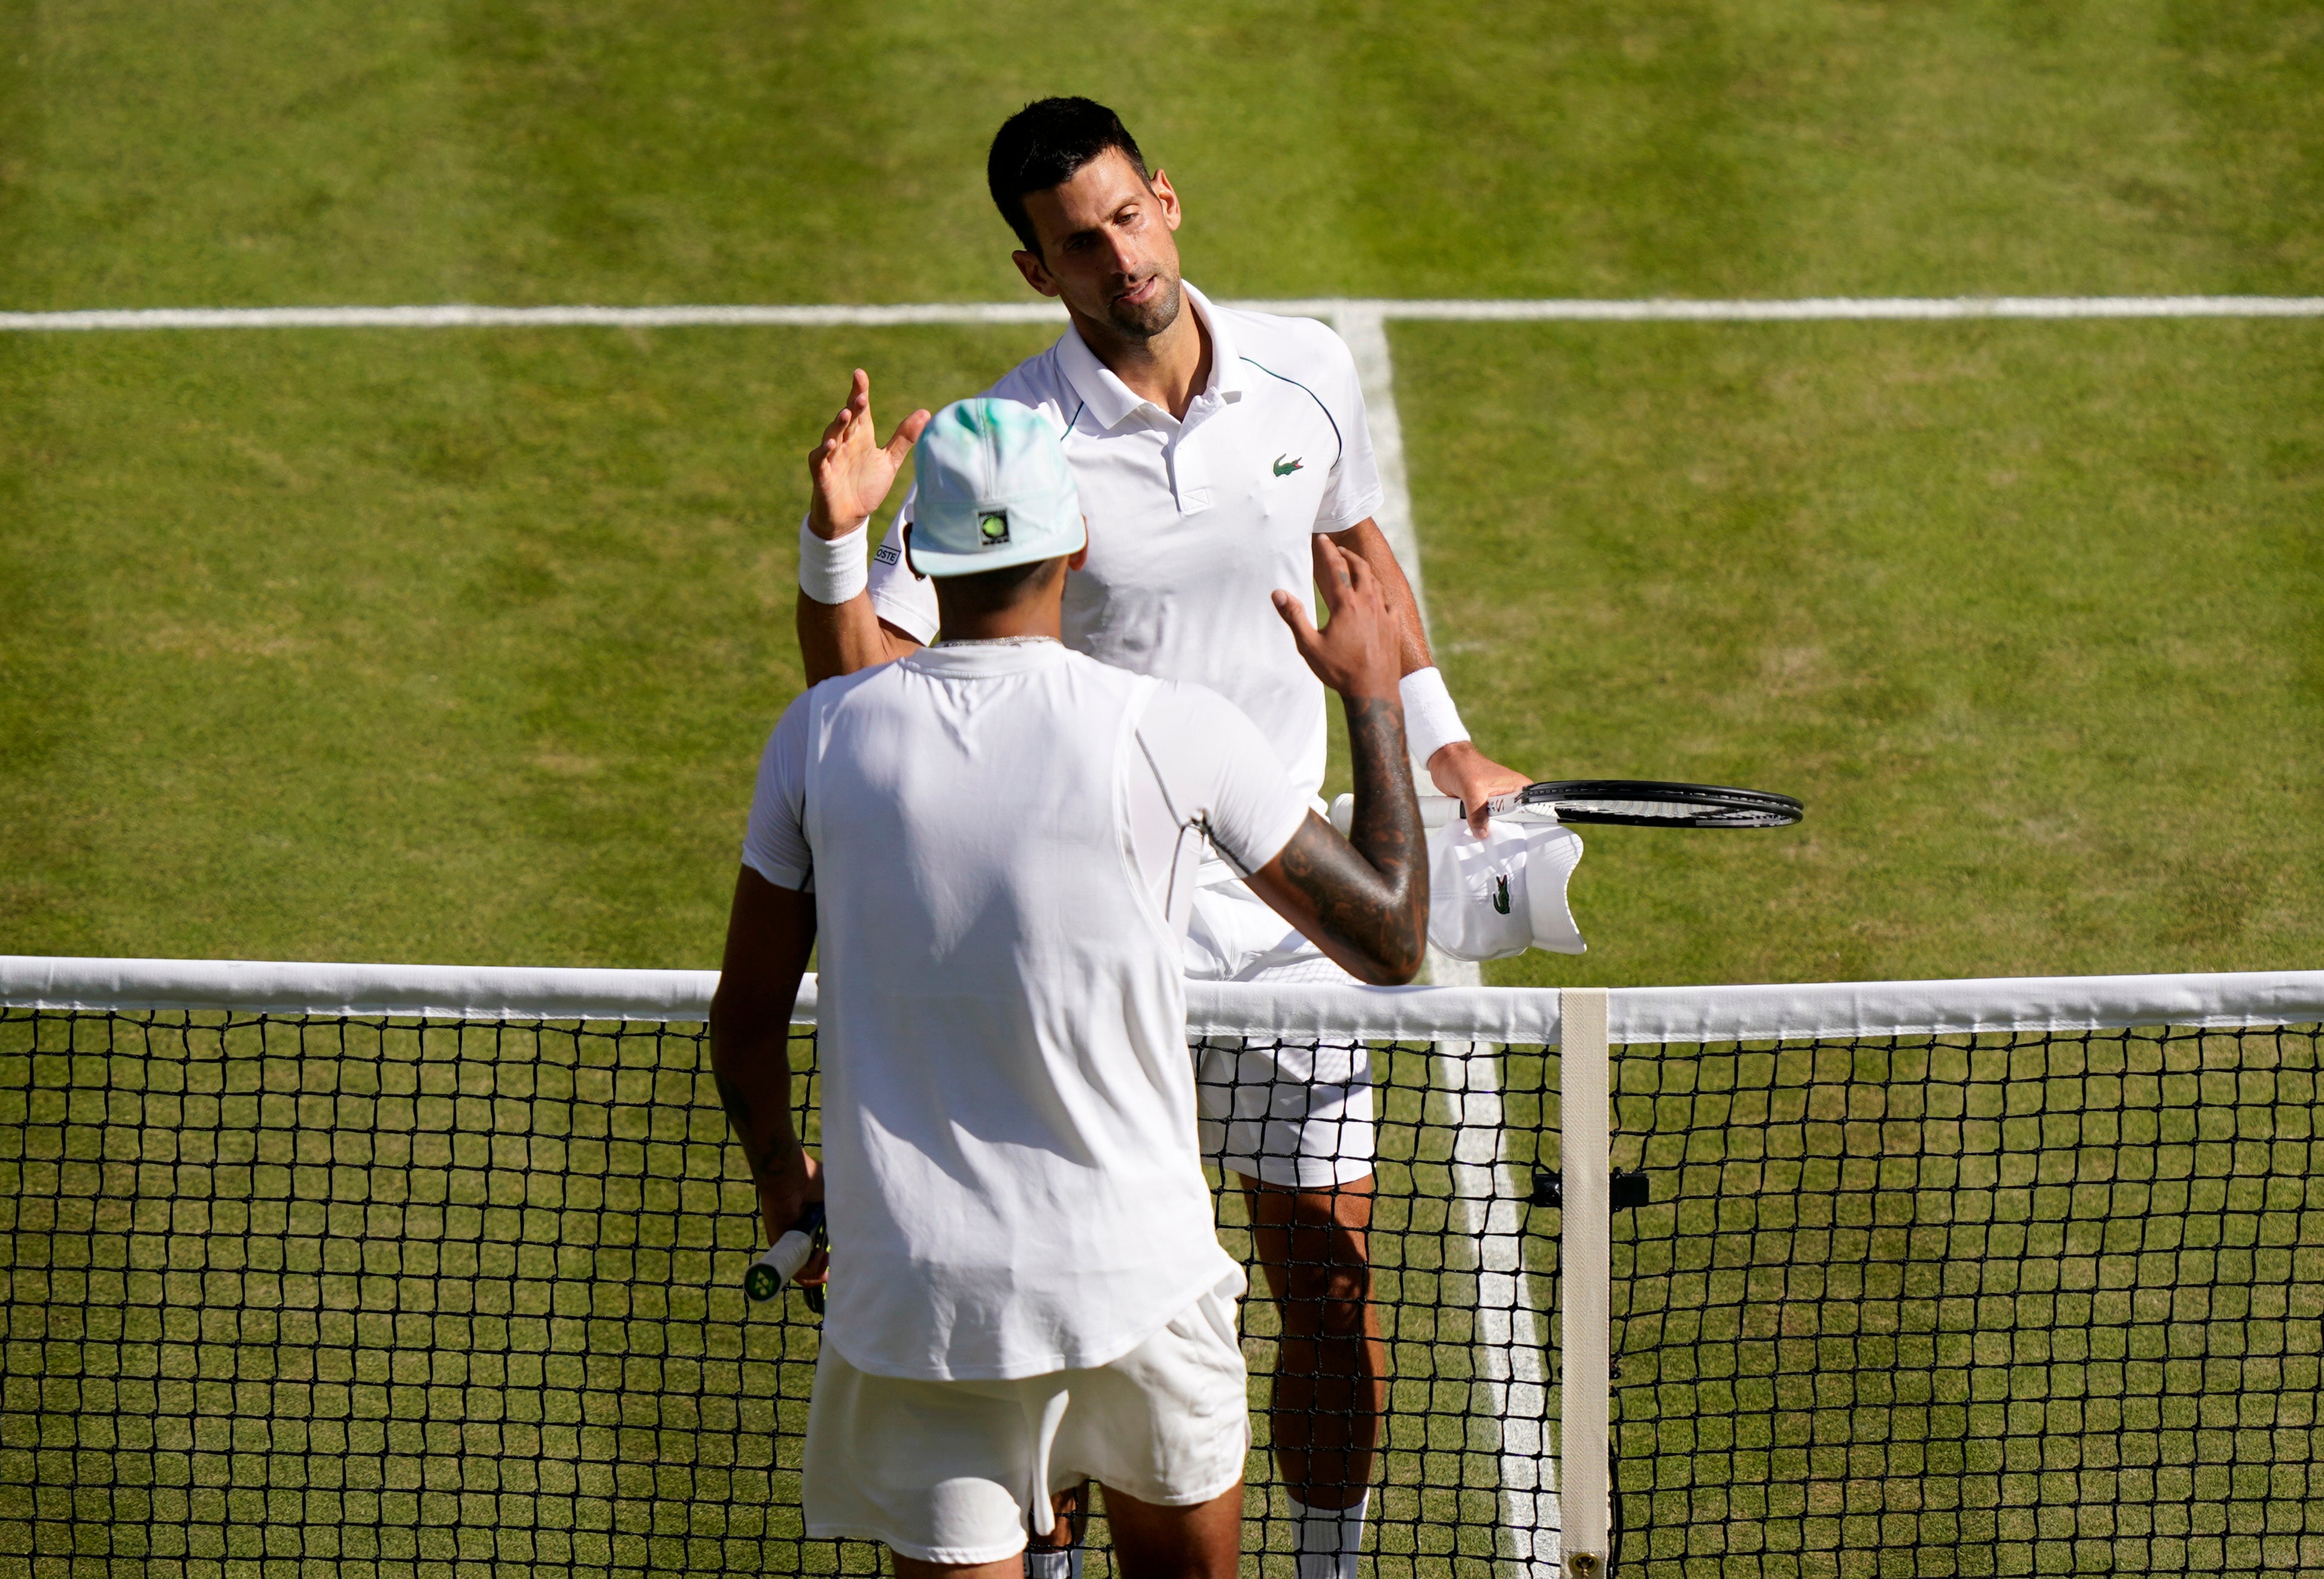 Serbia's Novak Djokovic celebrates beating Australia's Nick Kyrgios